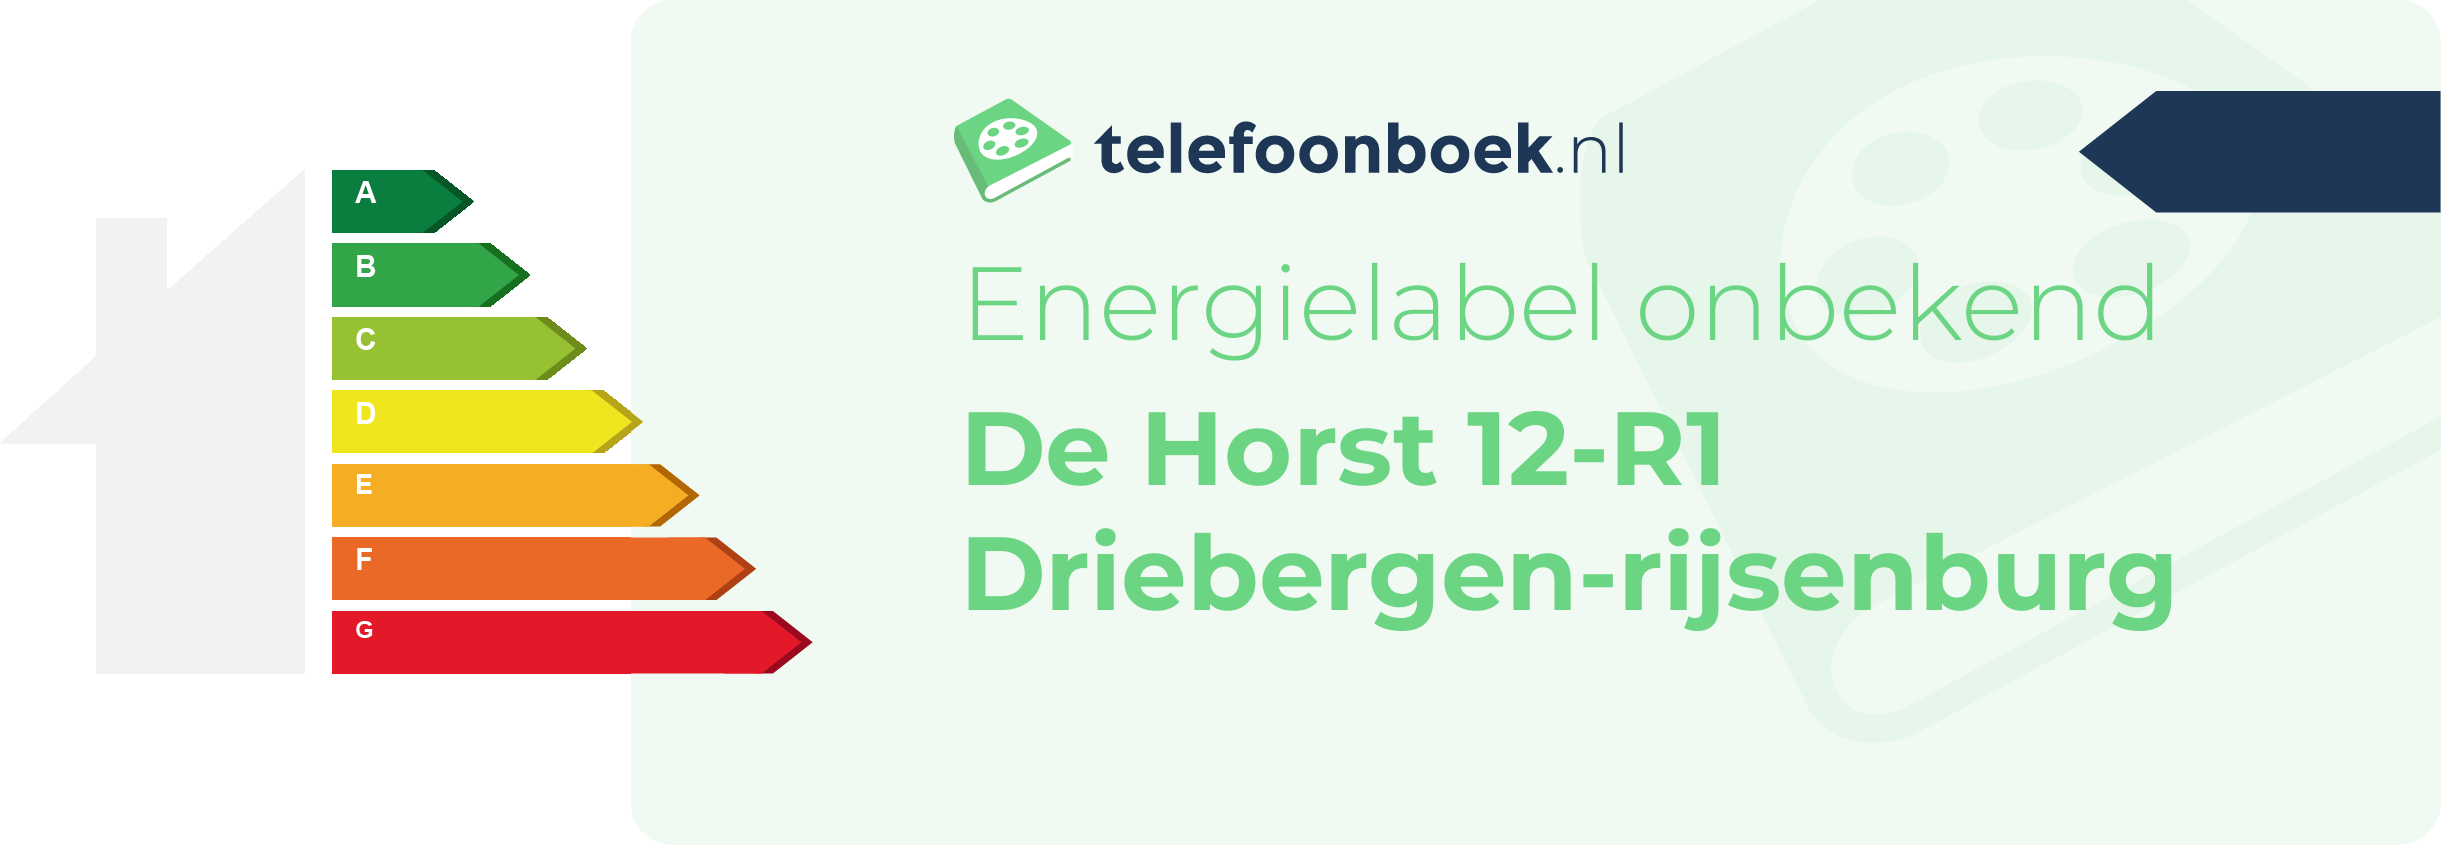 Energielabel De Horst 12-R1 Driebergen-Rijsenburg